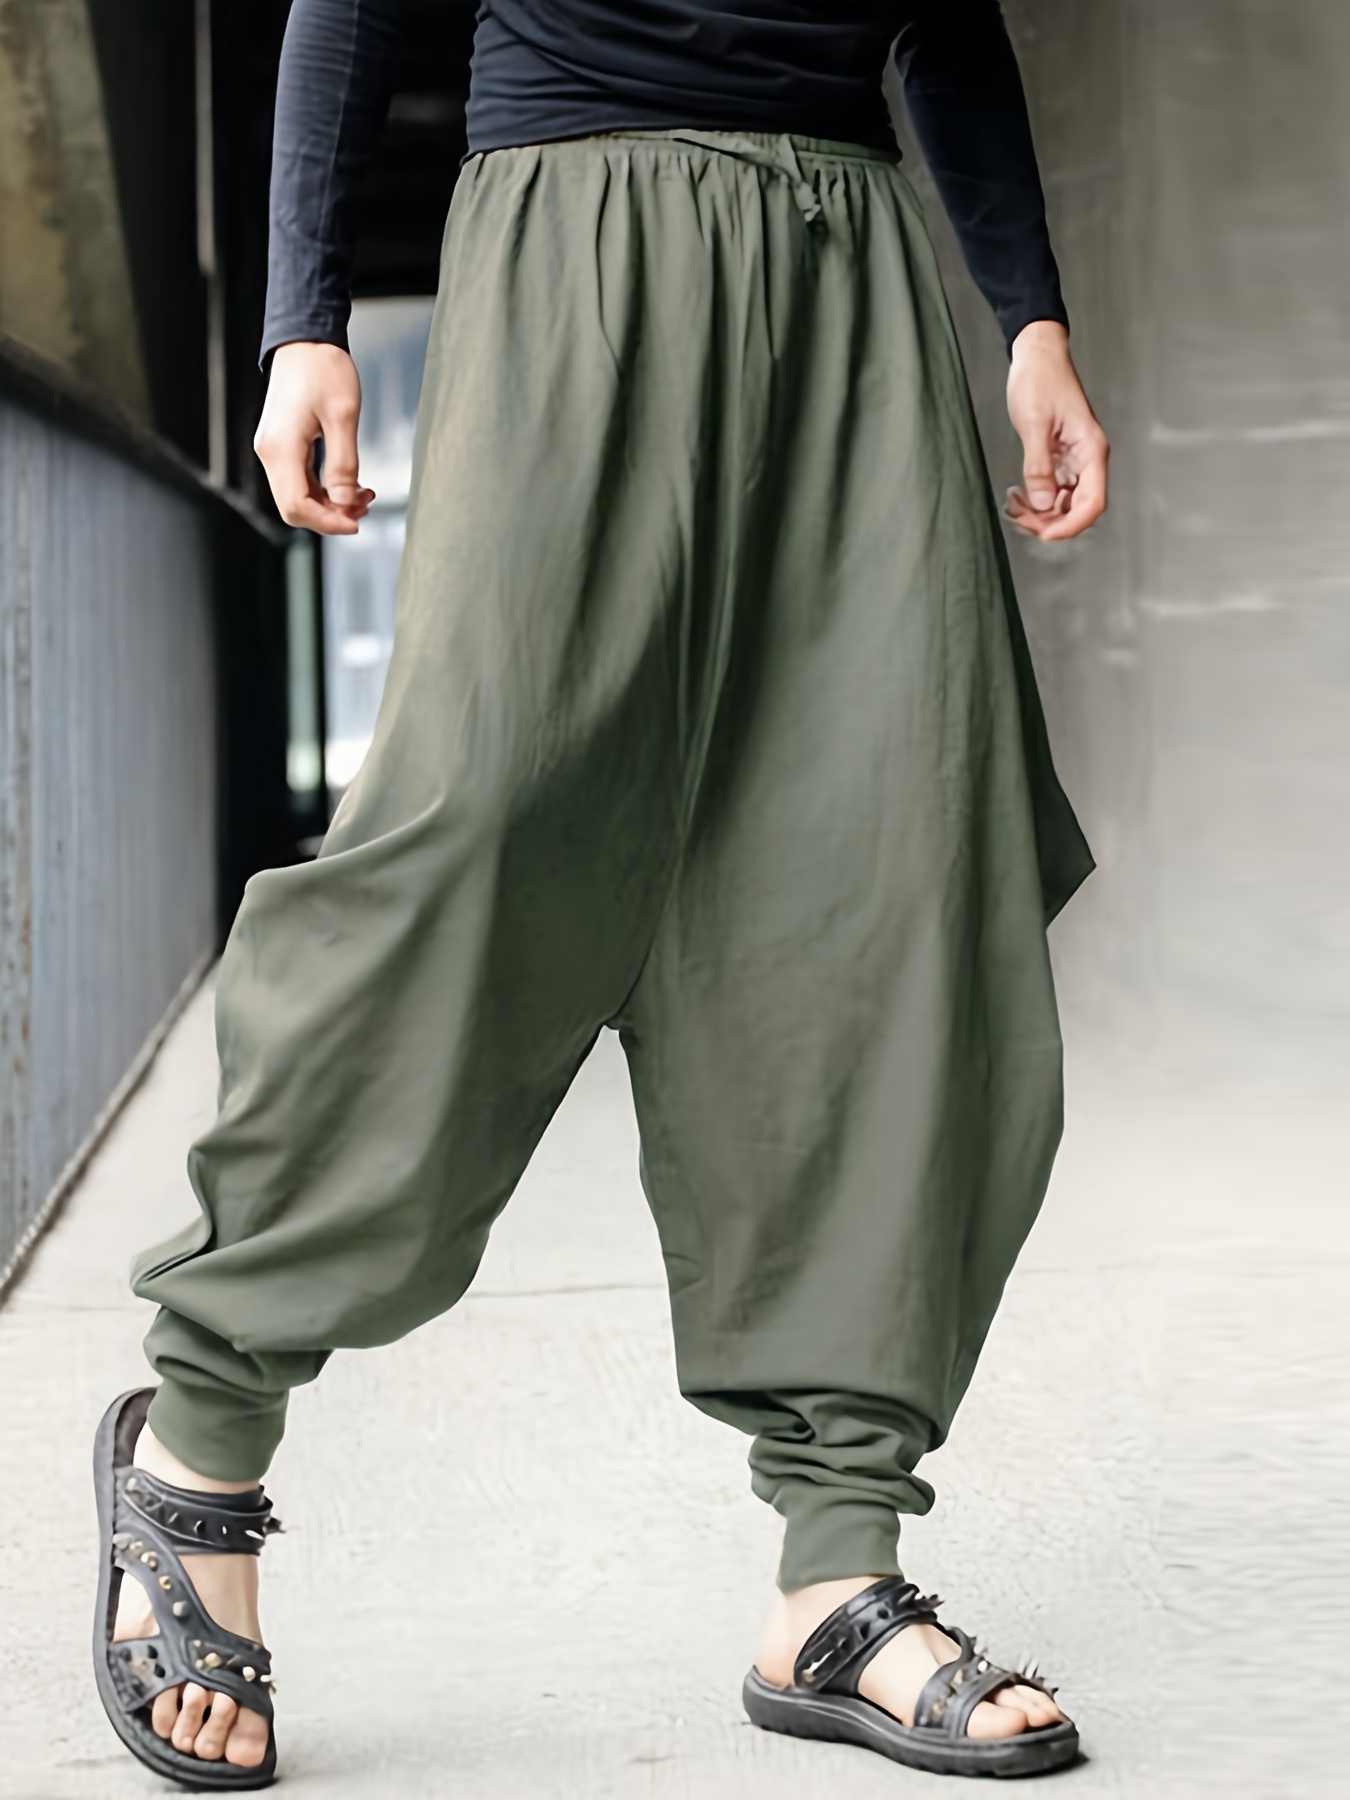 Plus Size Solid Color Cotton Leggings in Gray – Harem Pants